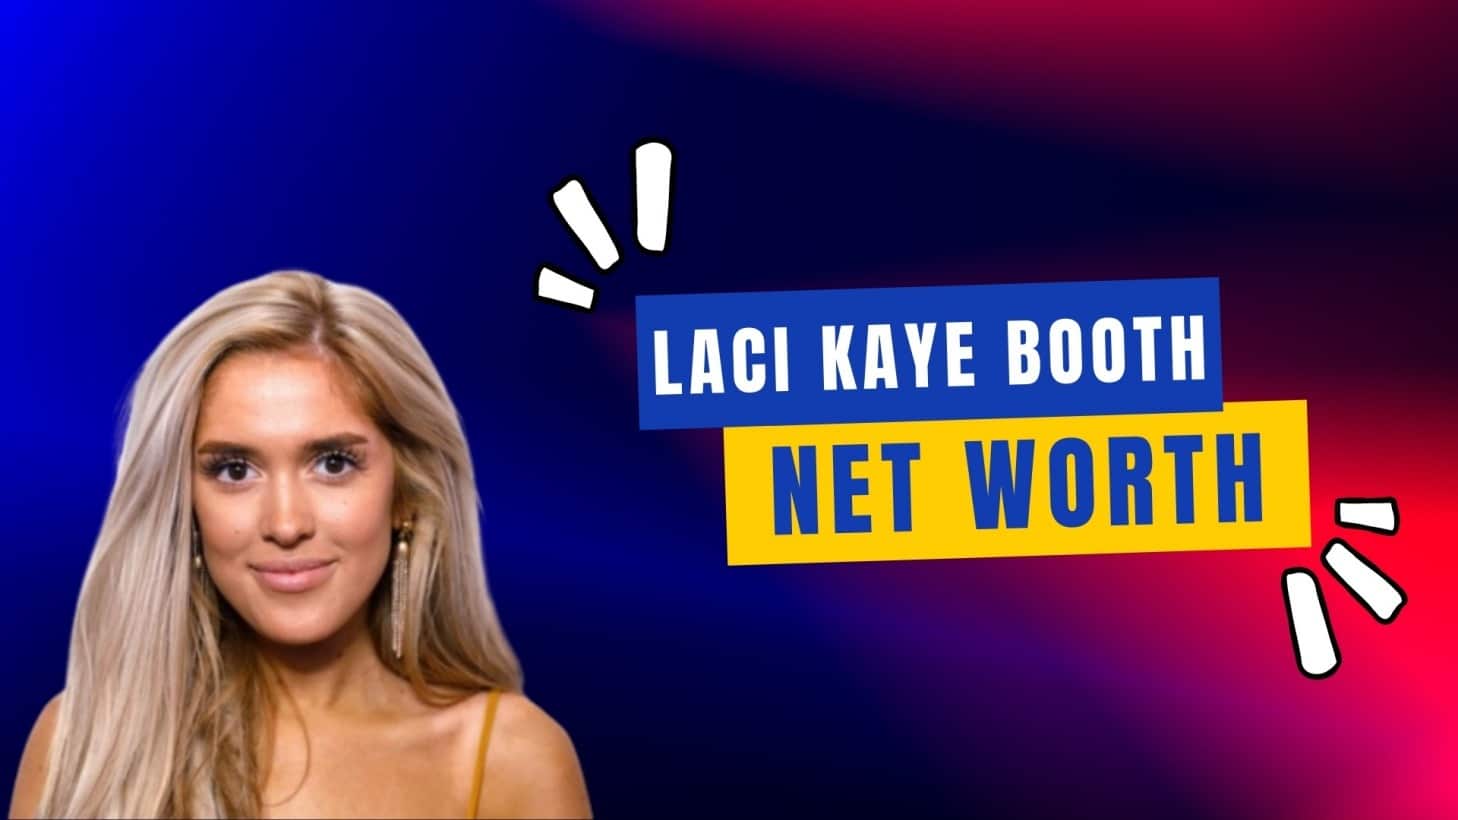 laci kaye booth net worth